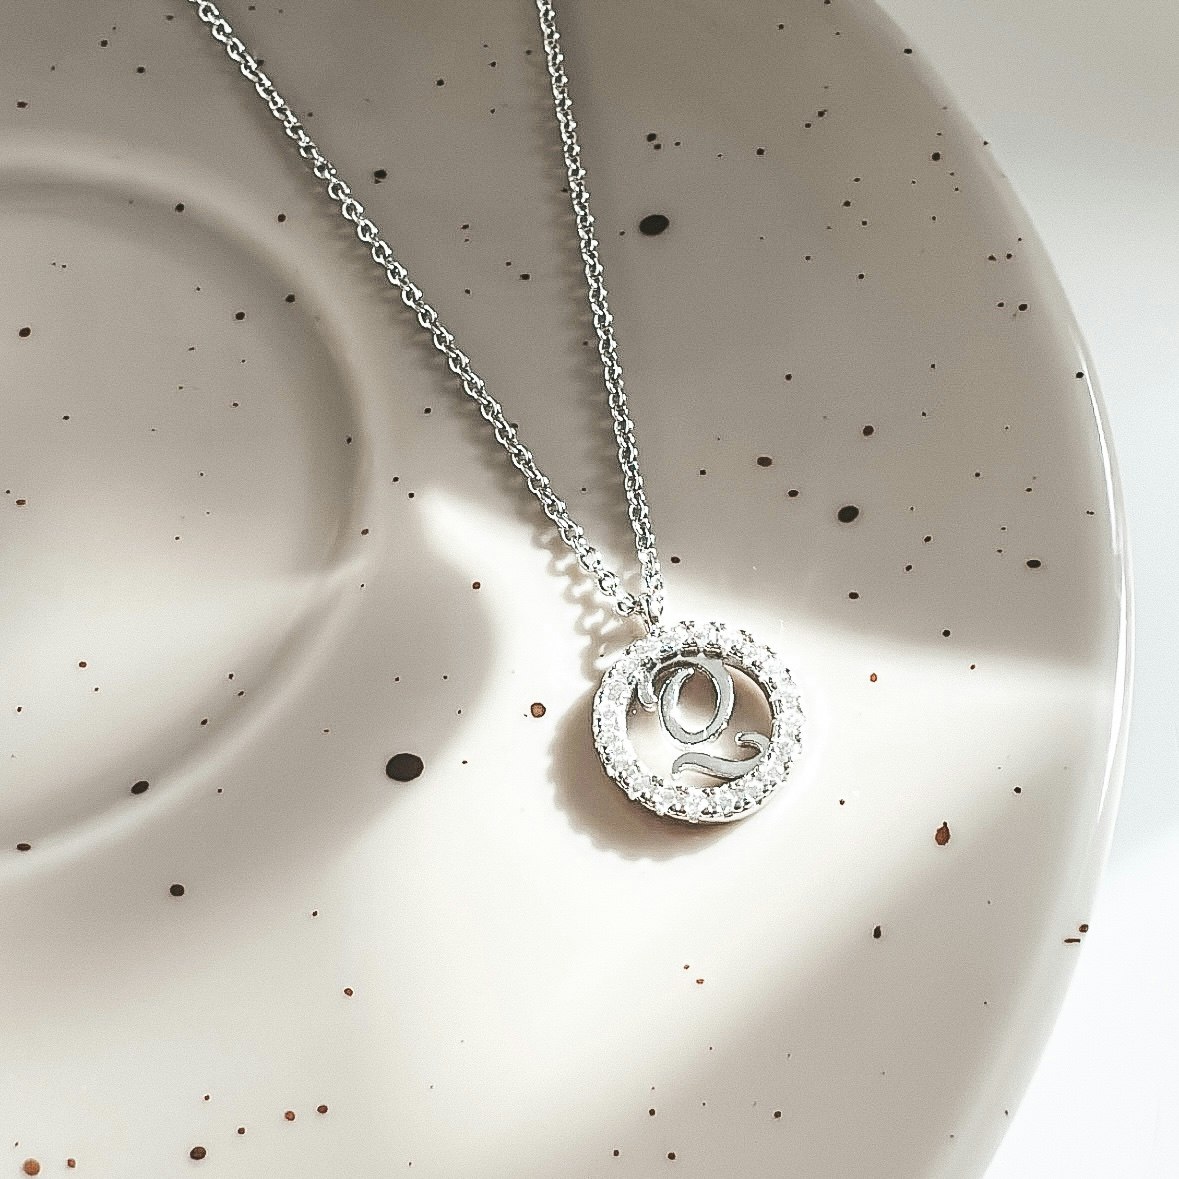 Colette Necklace Silver